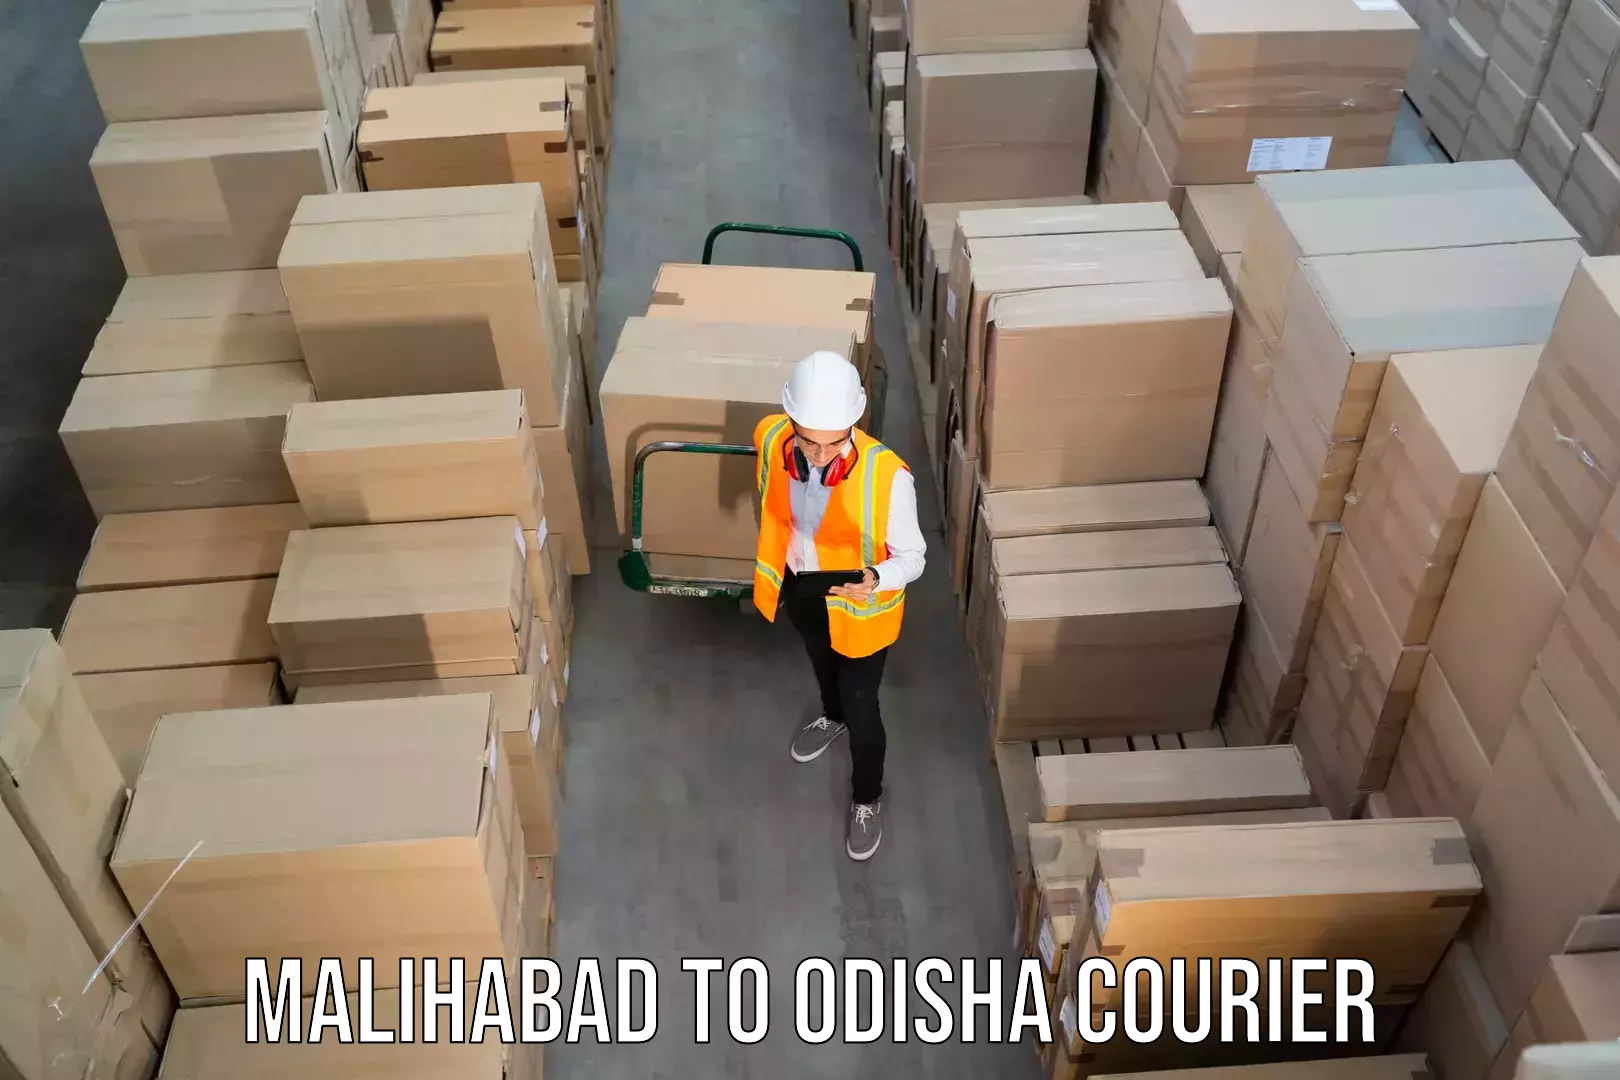 Courier service efficiency Malihabad to Kalahandi